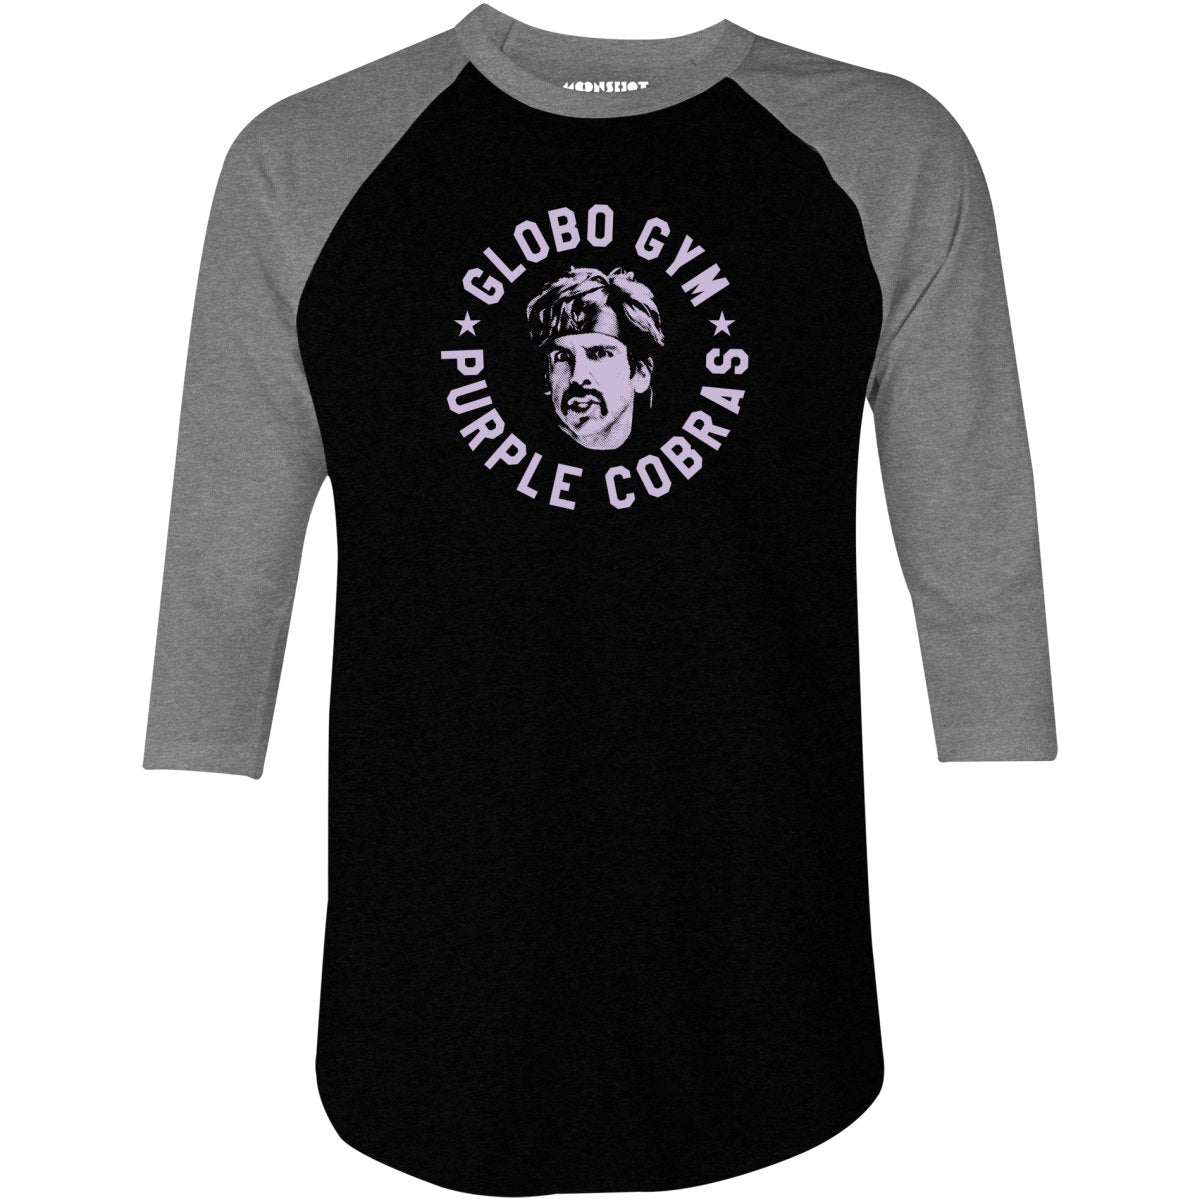 Globo Gym Purple Cobras - 3/4 Sleeve Raglan T-Shirt